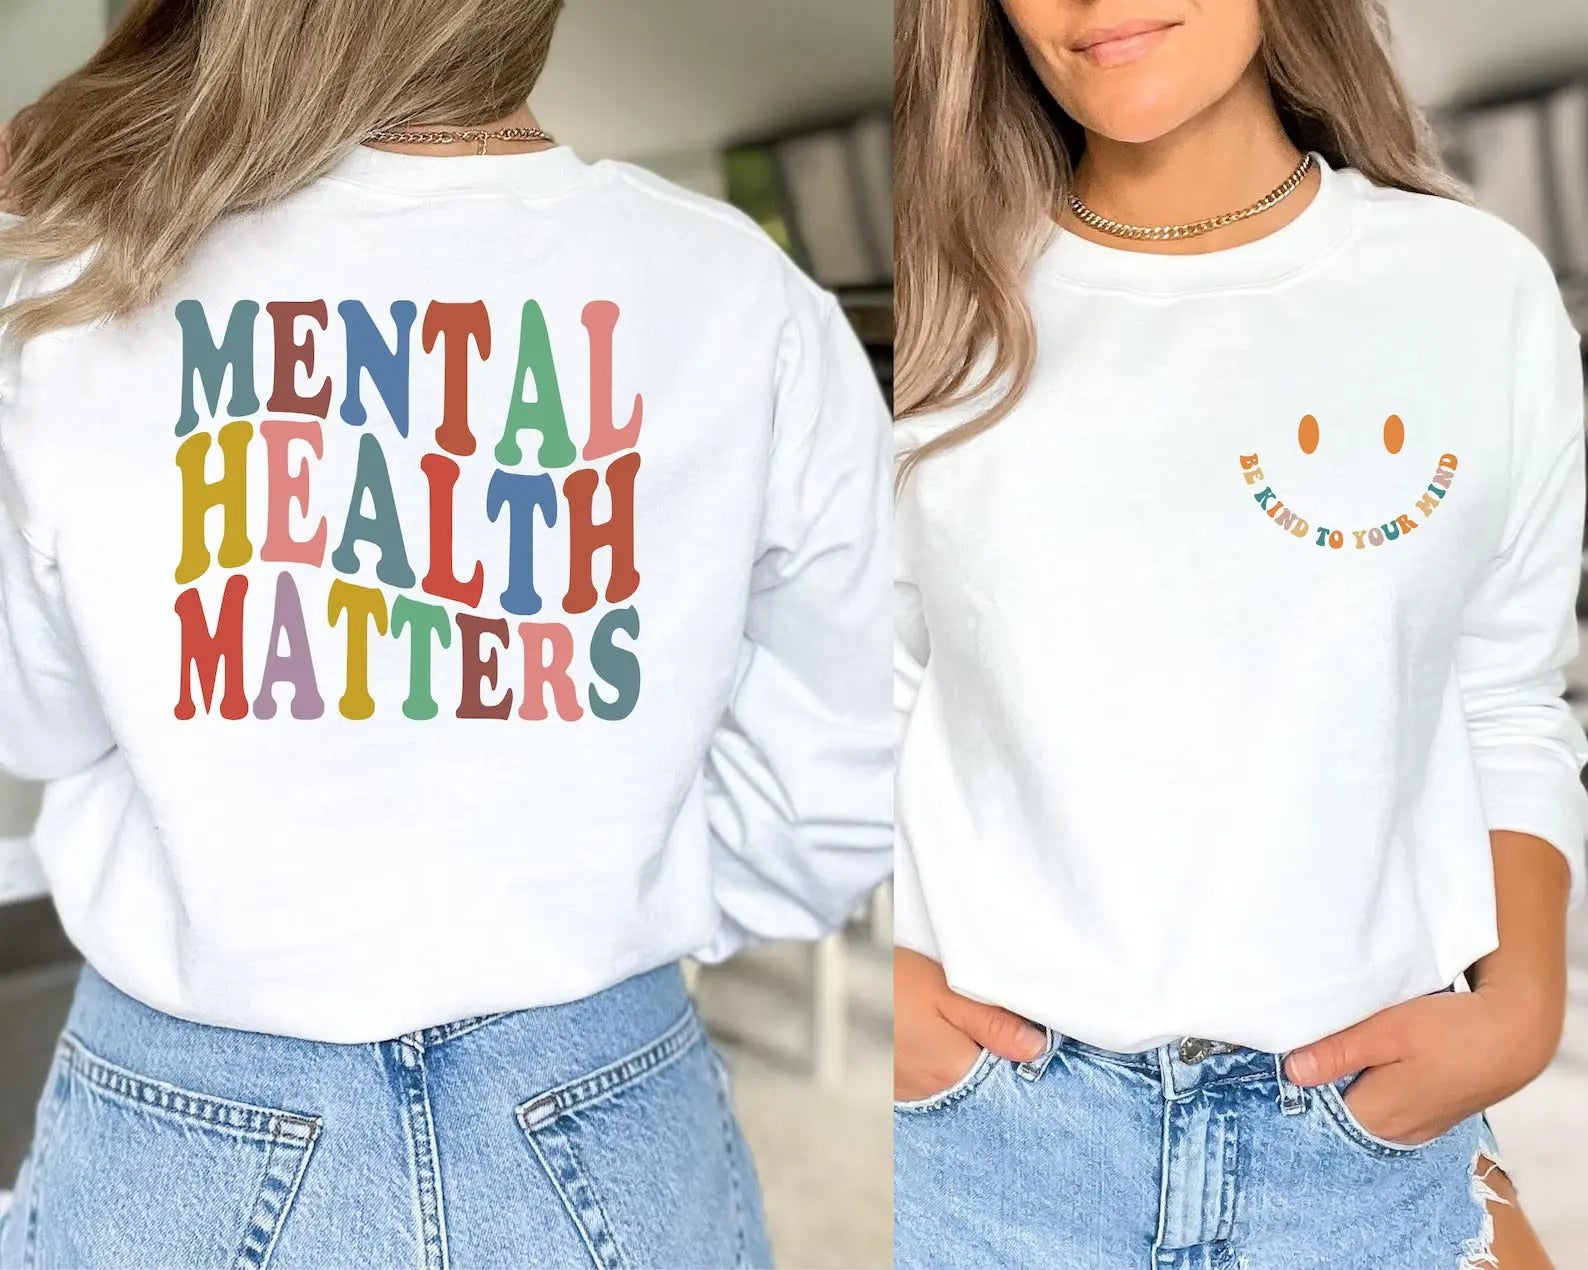 'Be Kind To Your Mind' Sweatshirt